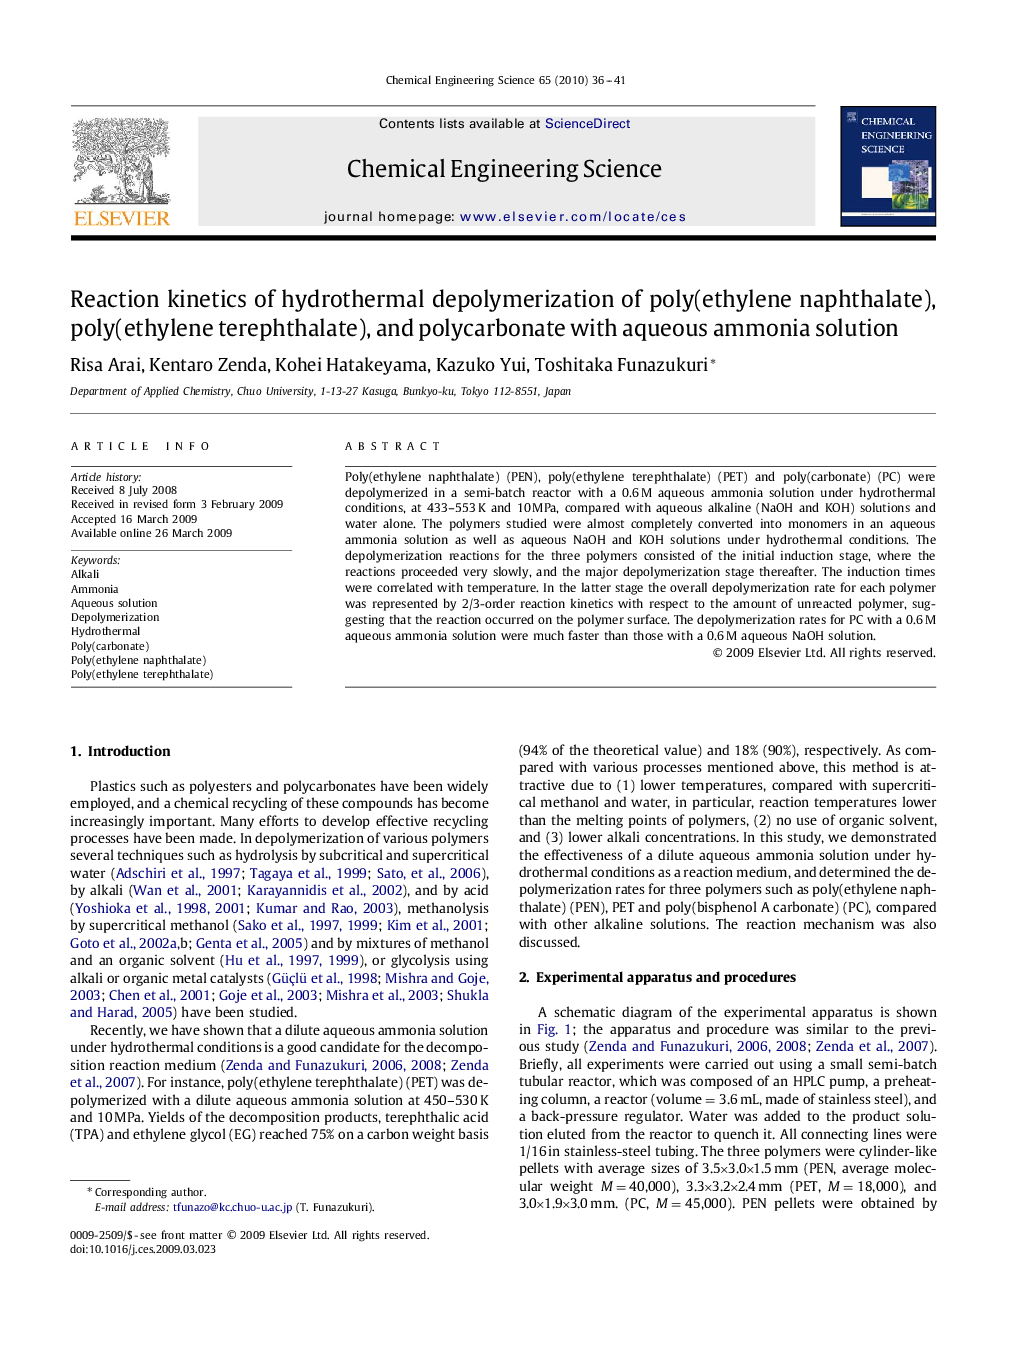 Reaction kinetics of hydrothermal depolymerization of poly(ethylene naphthalate), poly(ethylene terephthalate), and polycarbonate with aqueous ammonia solution